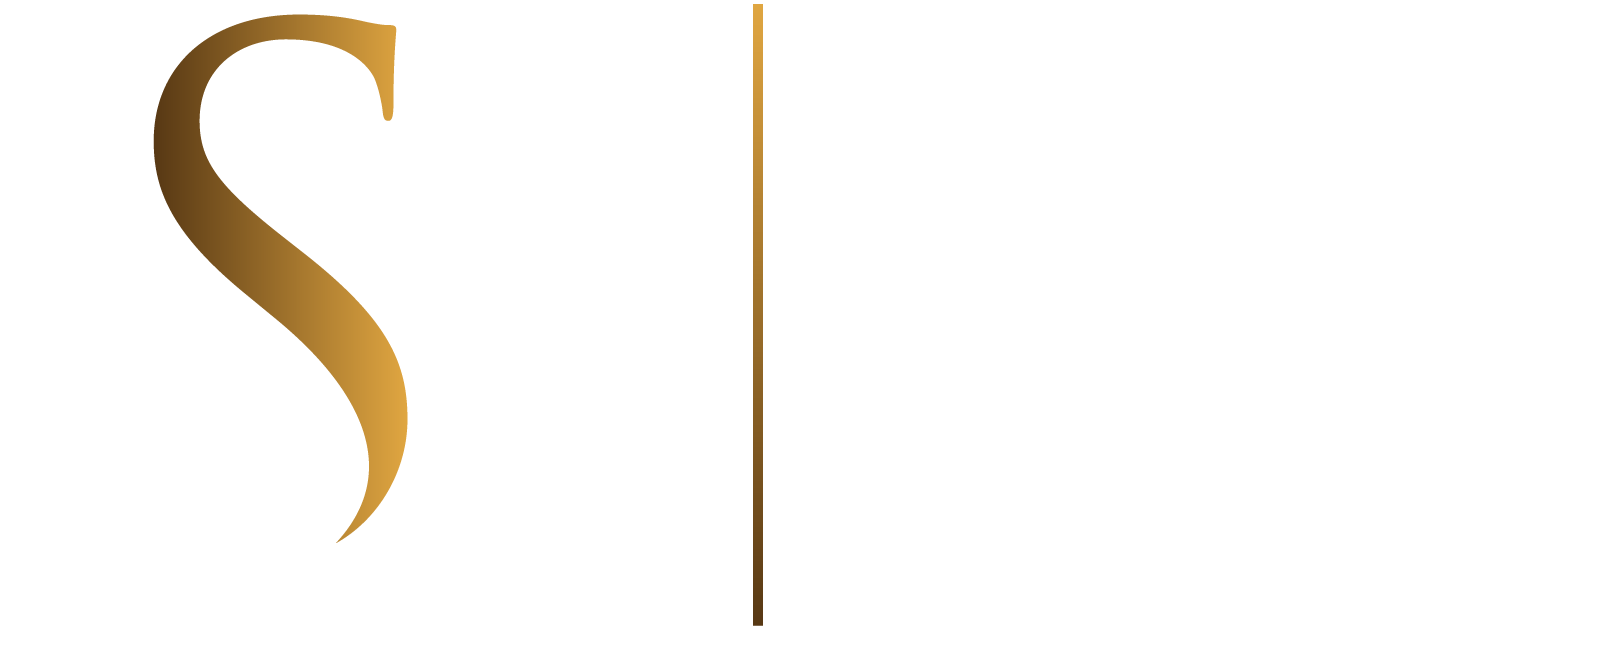 Saunders Strategic Advisors